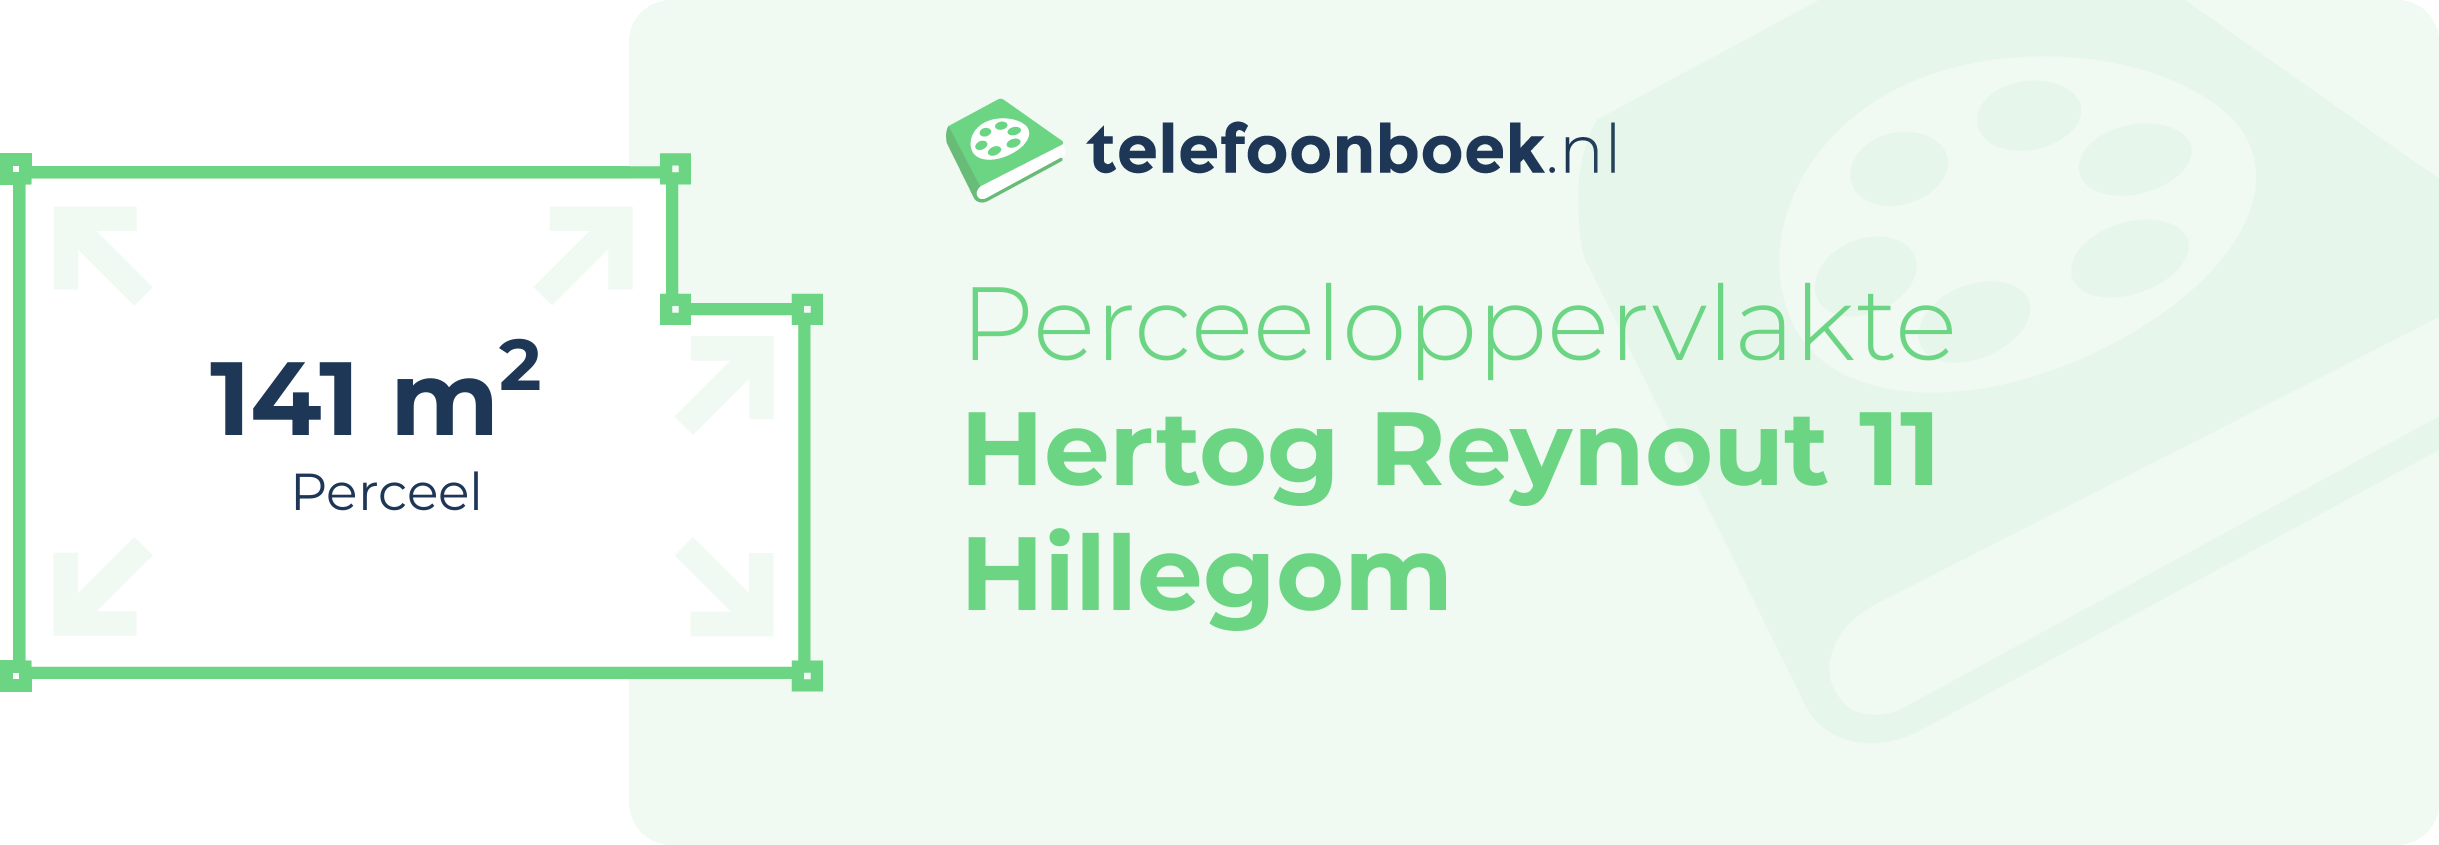 Perceeloppervlakte Hertog Reynout 11 Hillegom